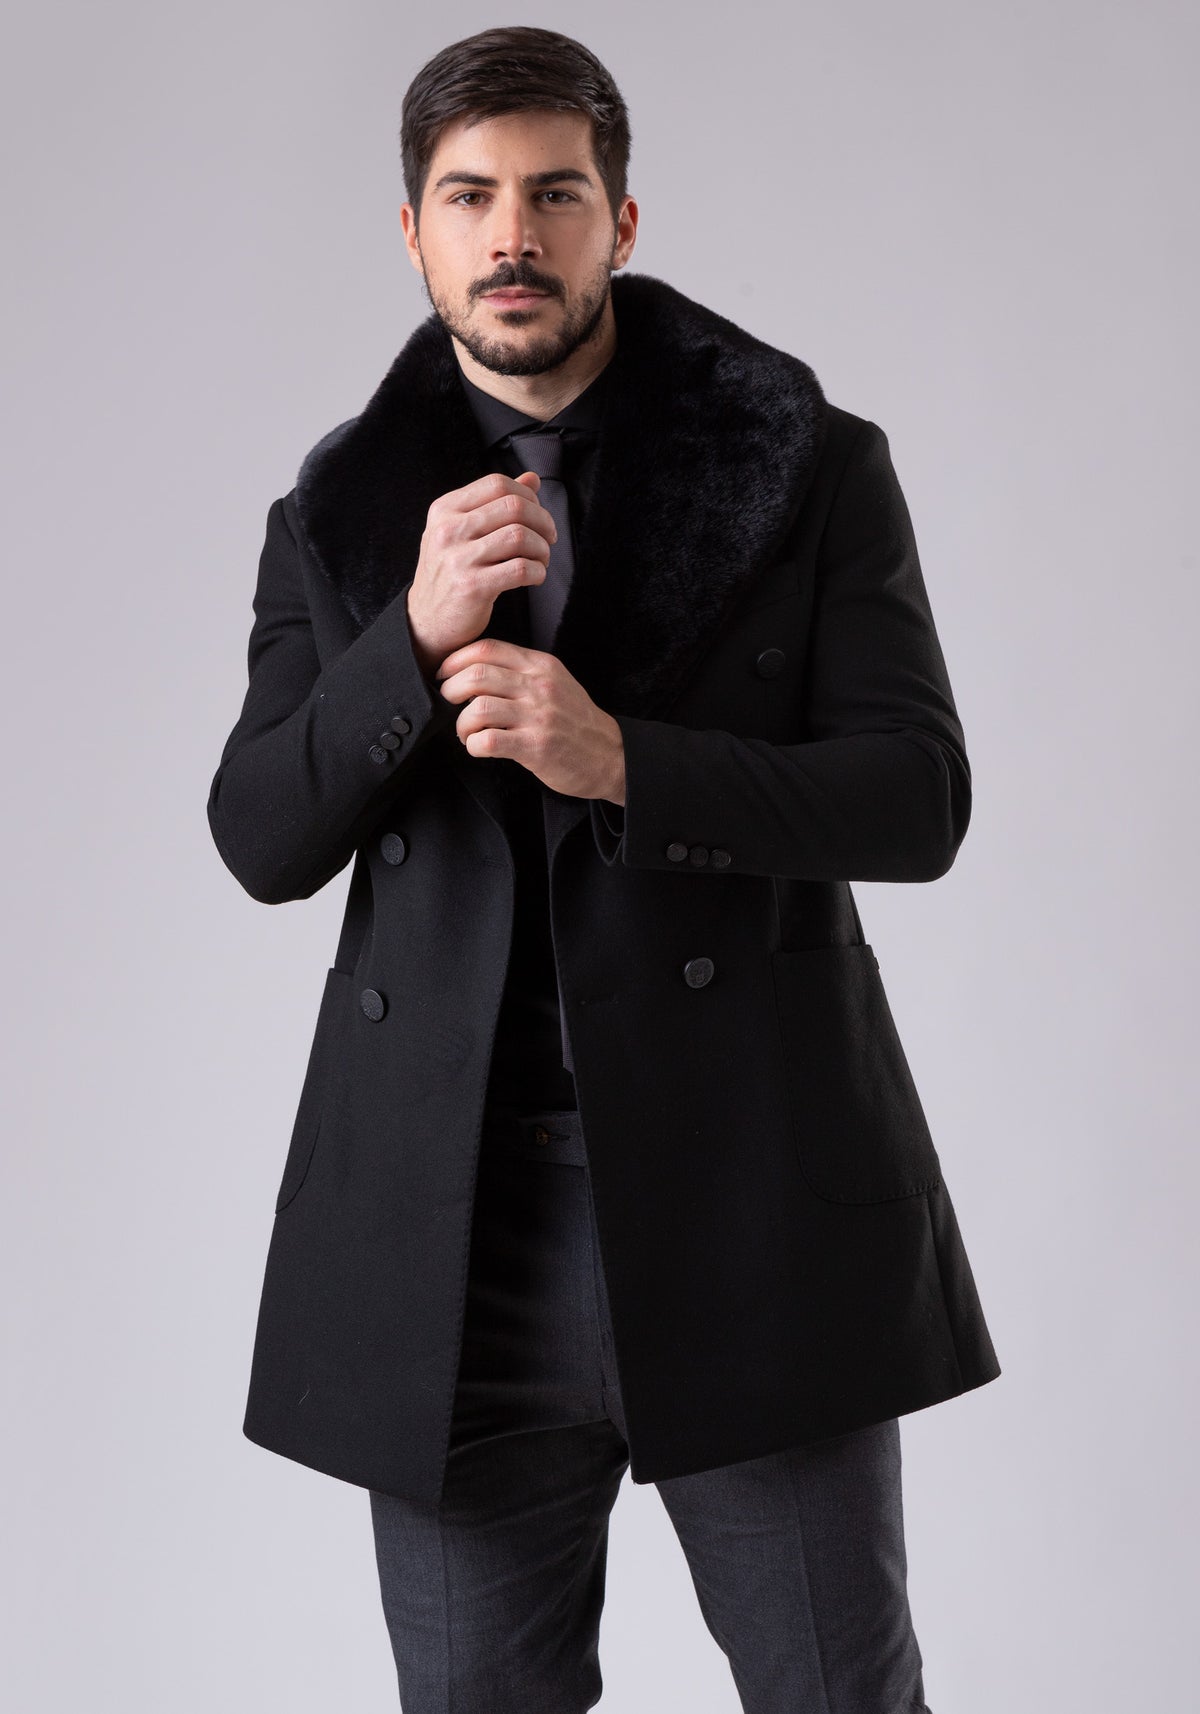 Fur coat black